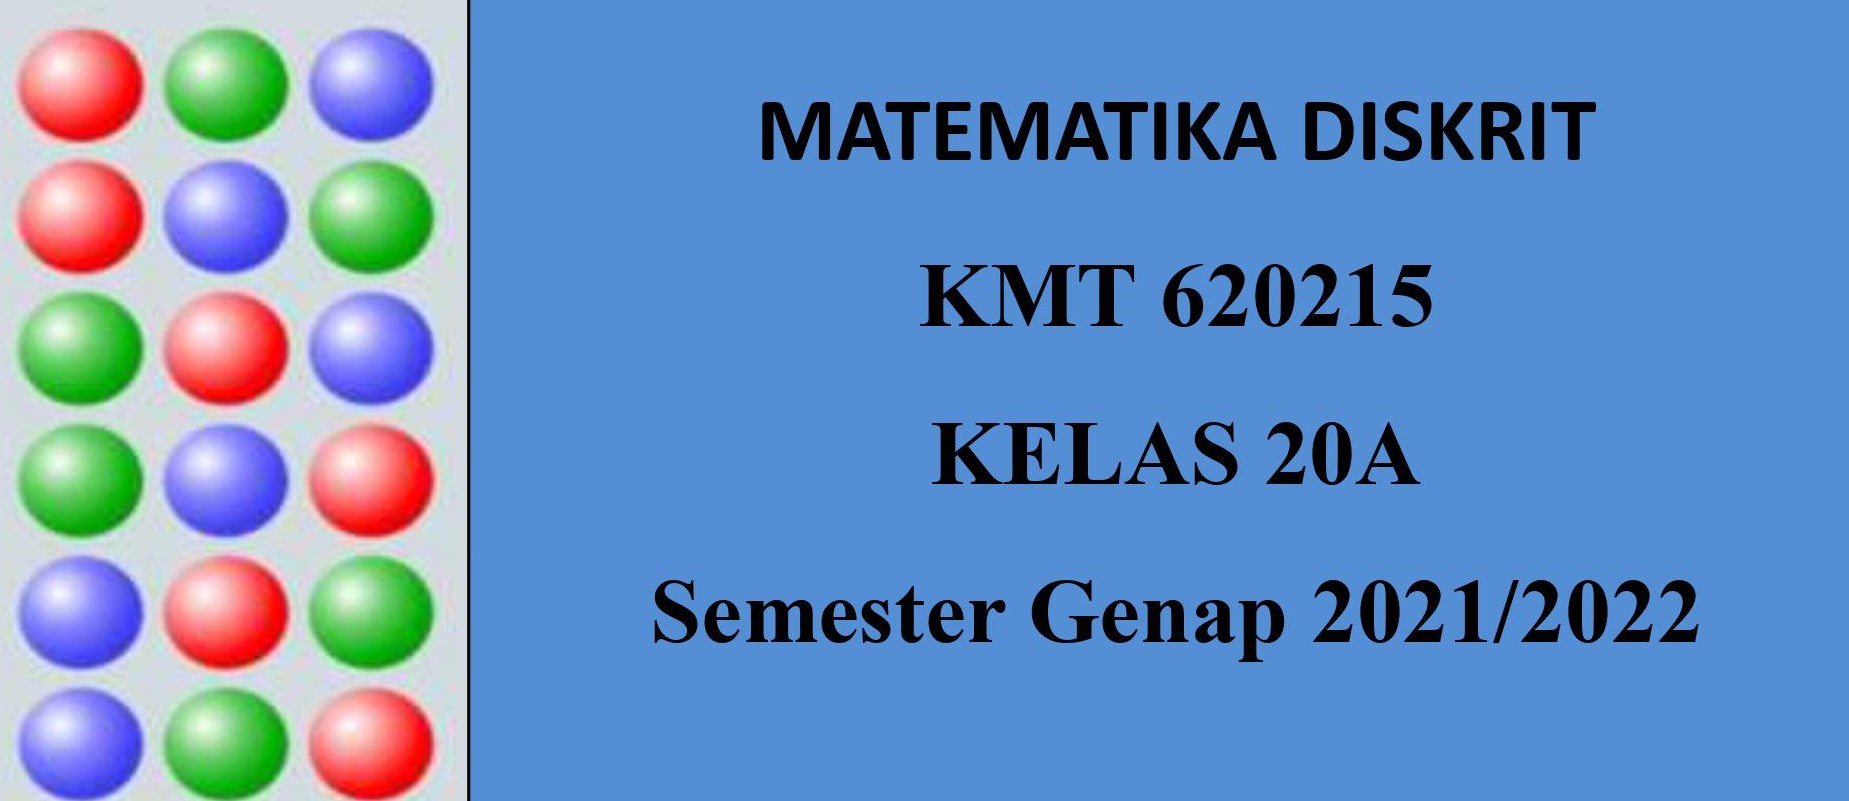 PSPM_MATEMATIKA DISKRIT_20A_GENAP 2021/2022